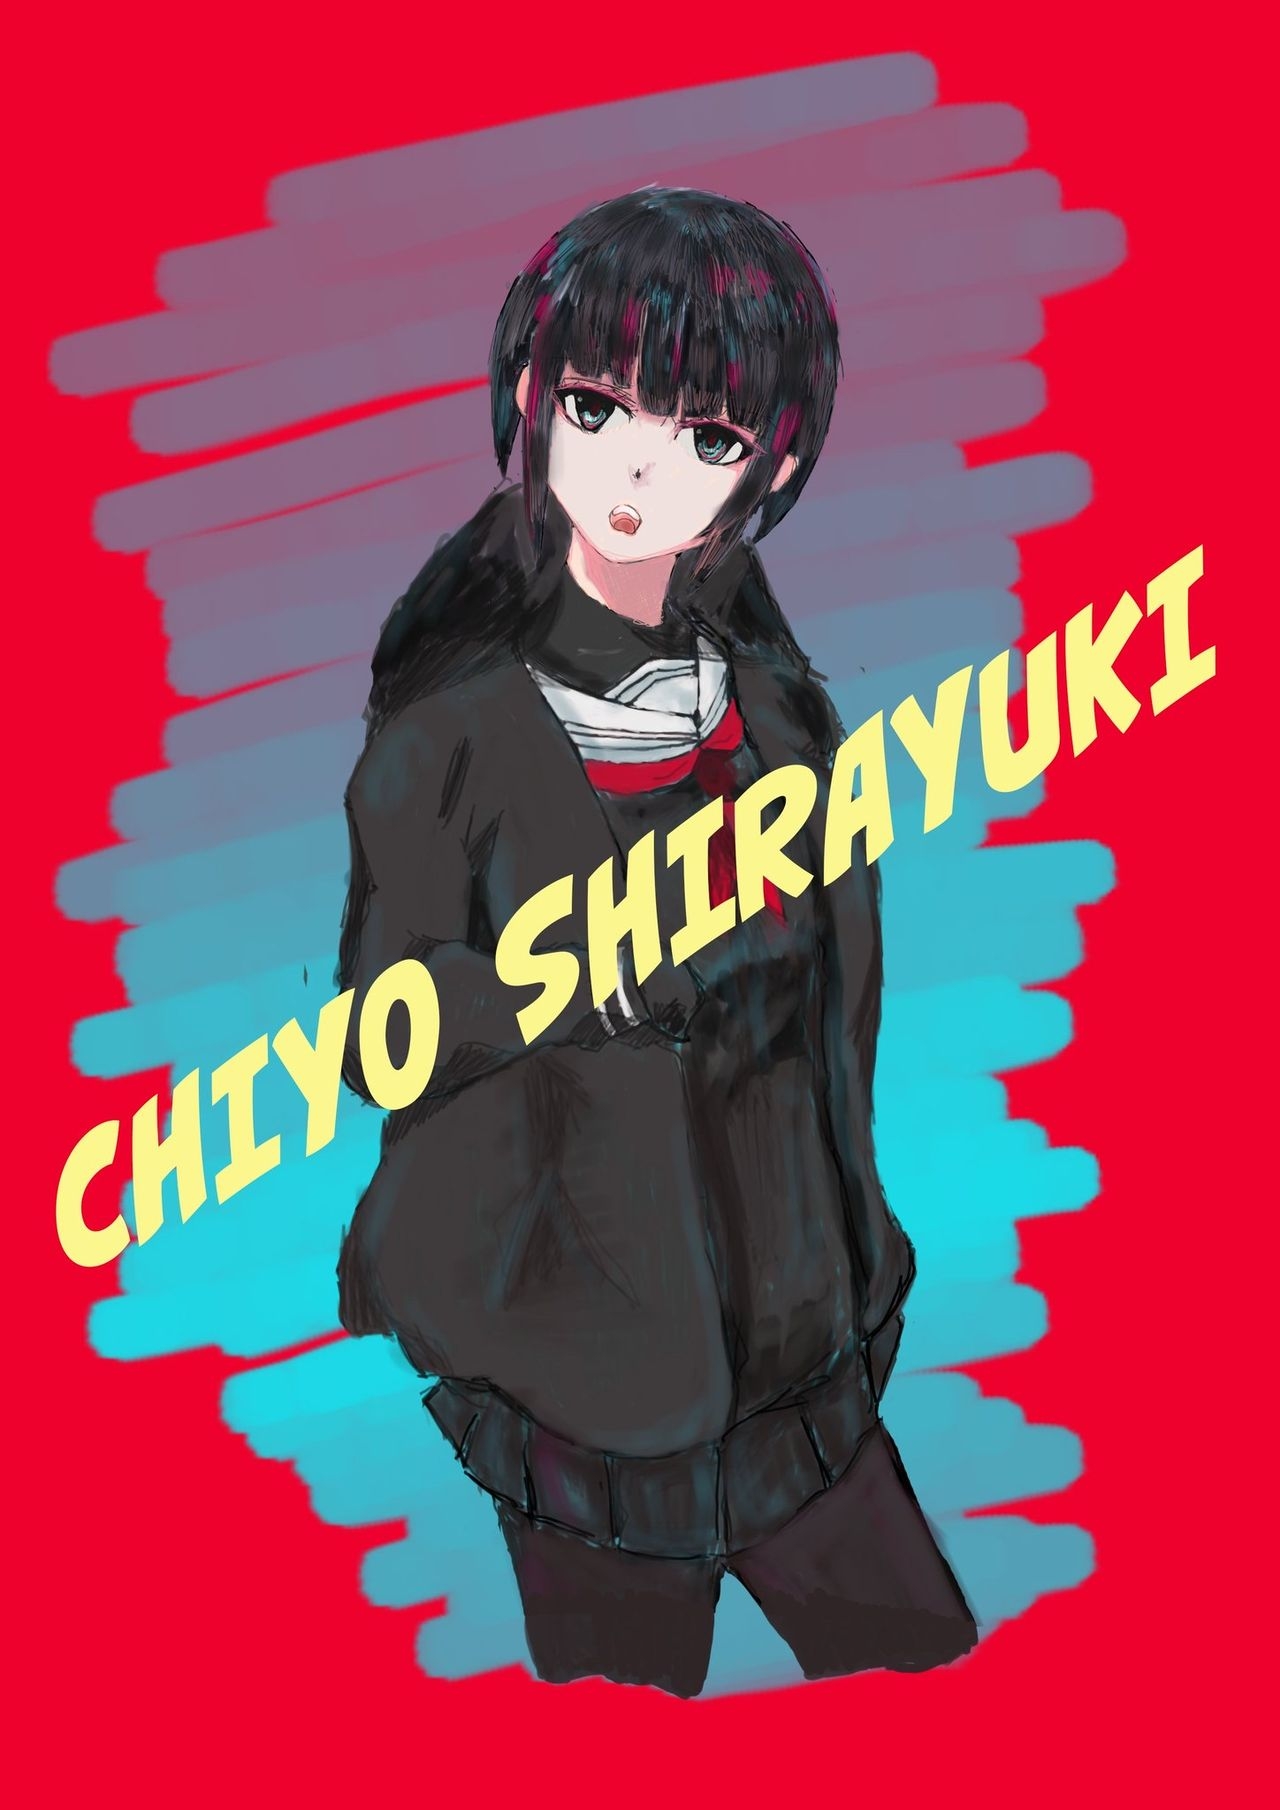 Idolmaster Character Fan Art Gallery - Chiyo Shirayuki 19